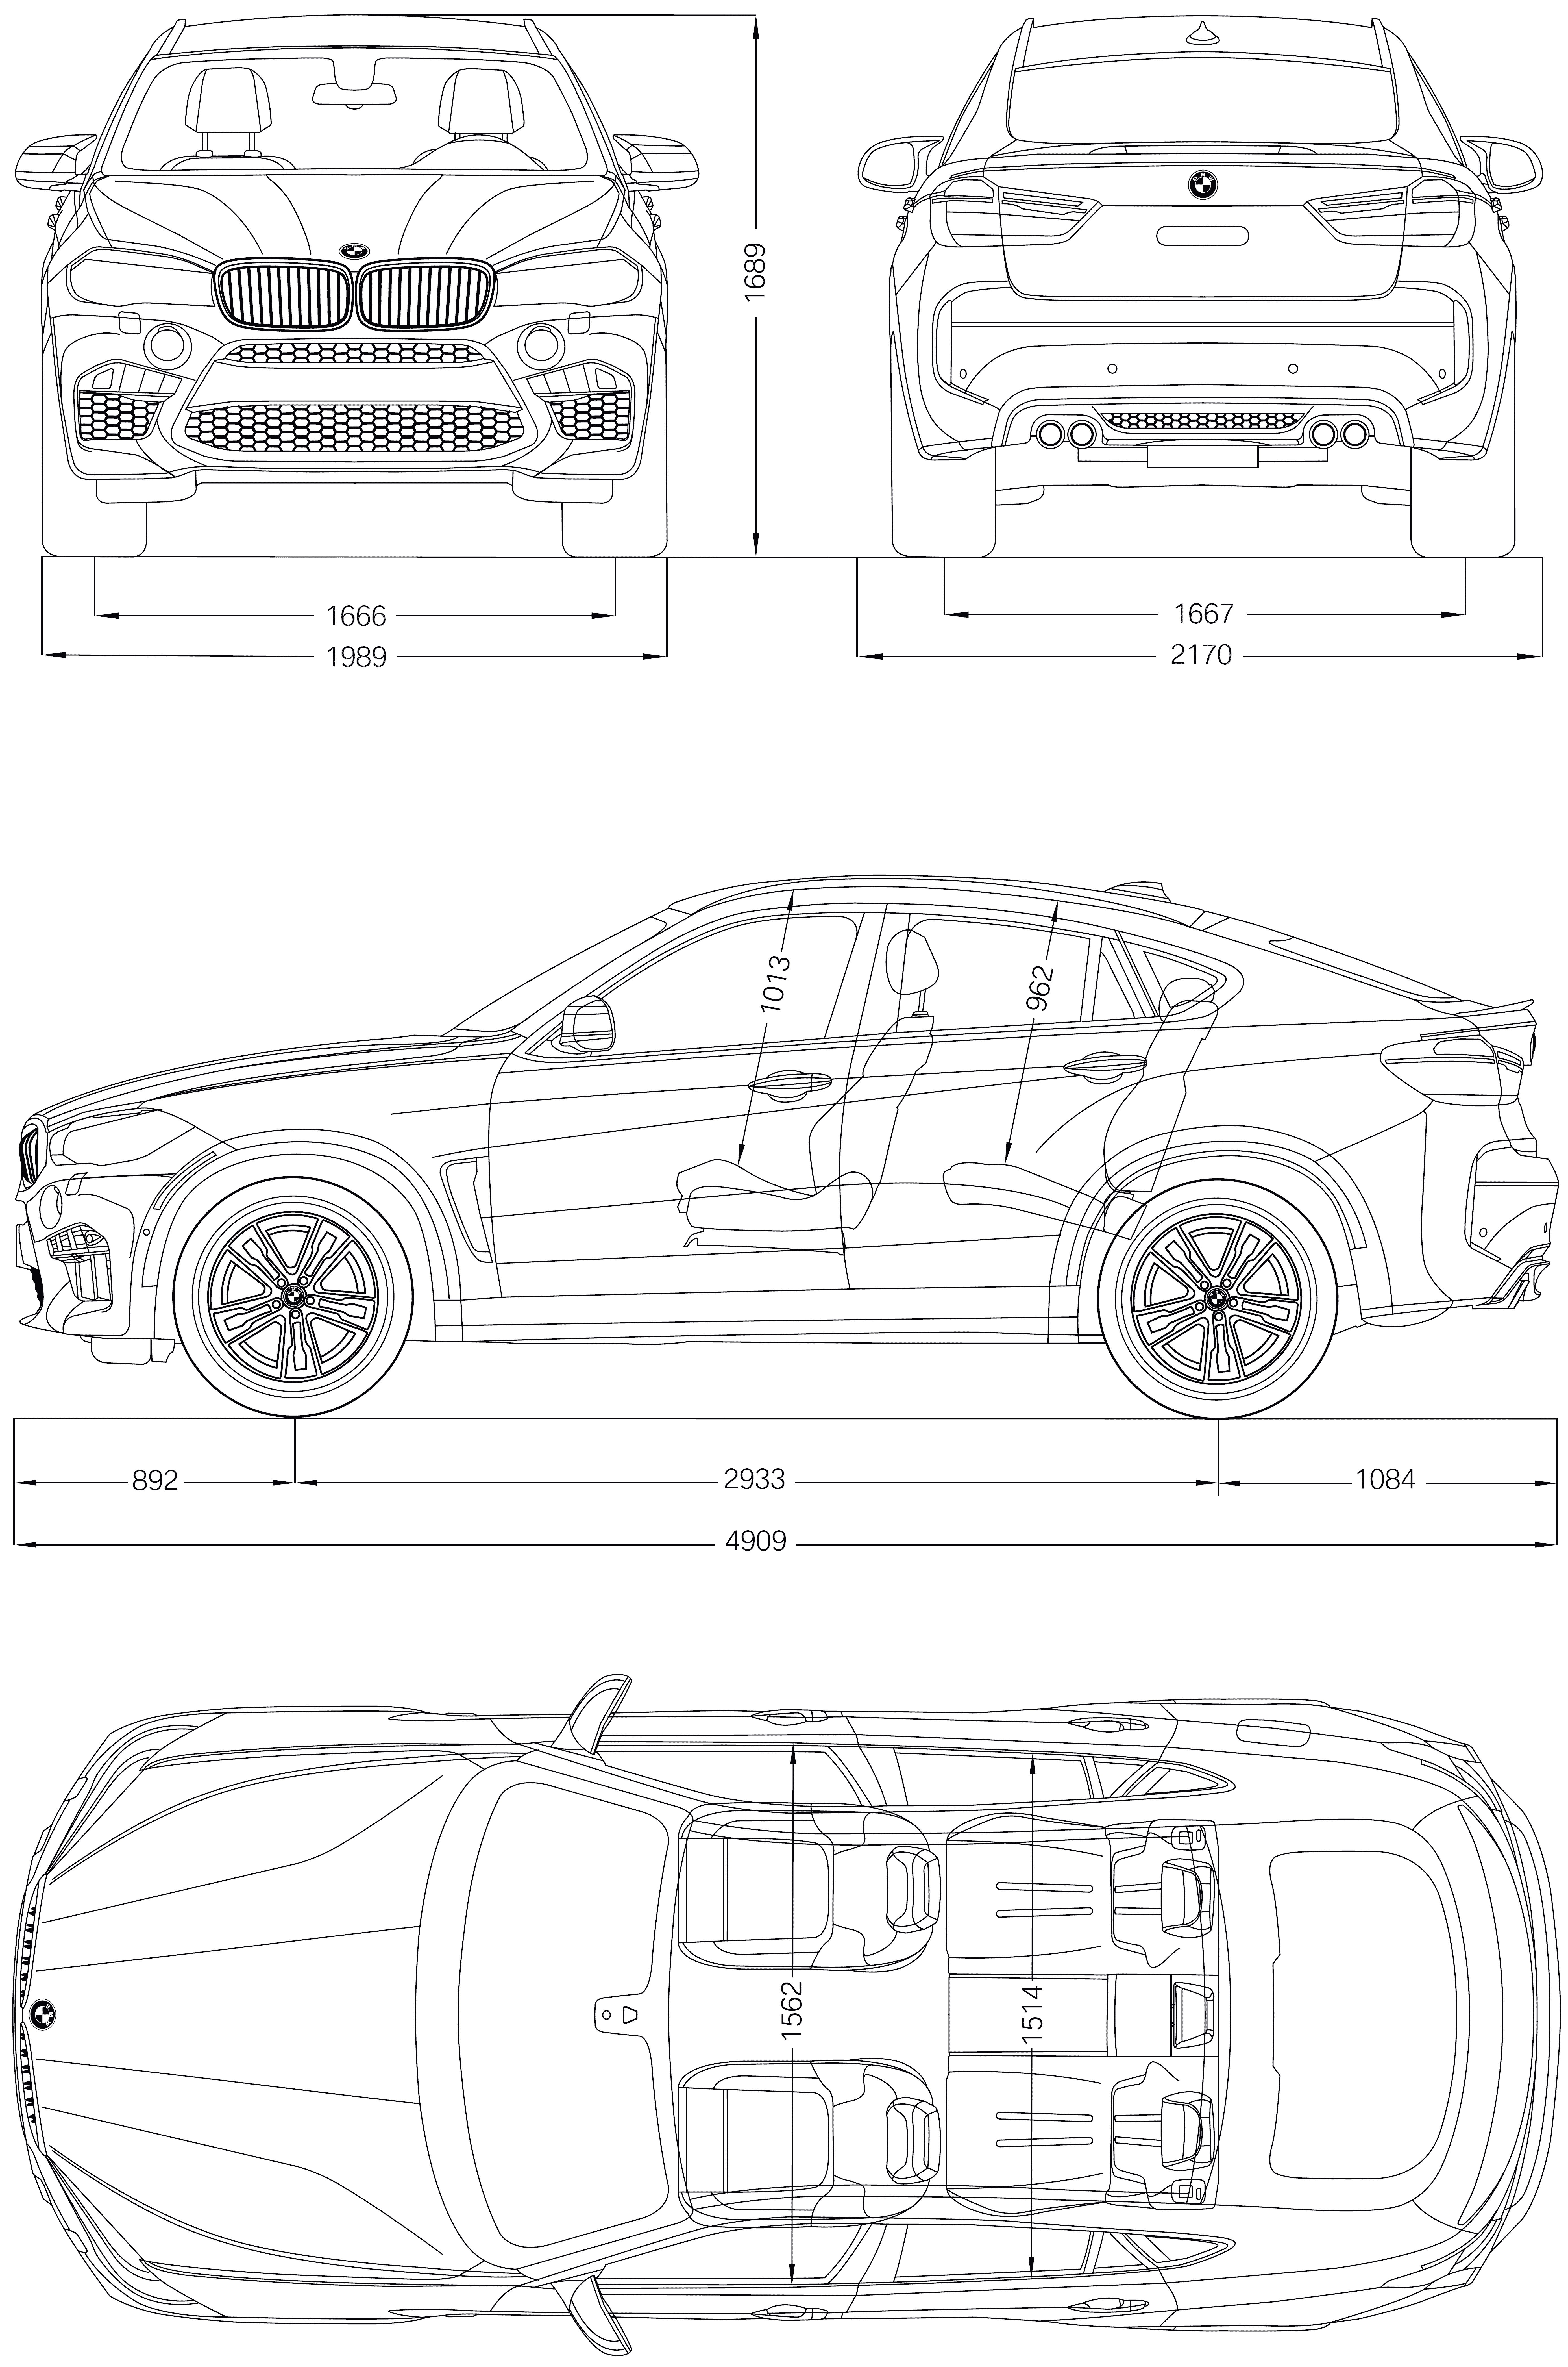 BMW X6 M blueprint